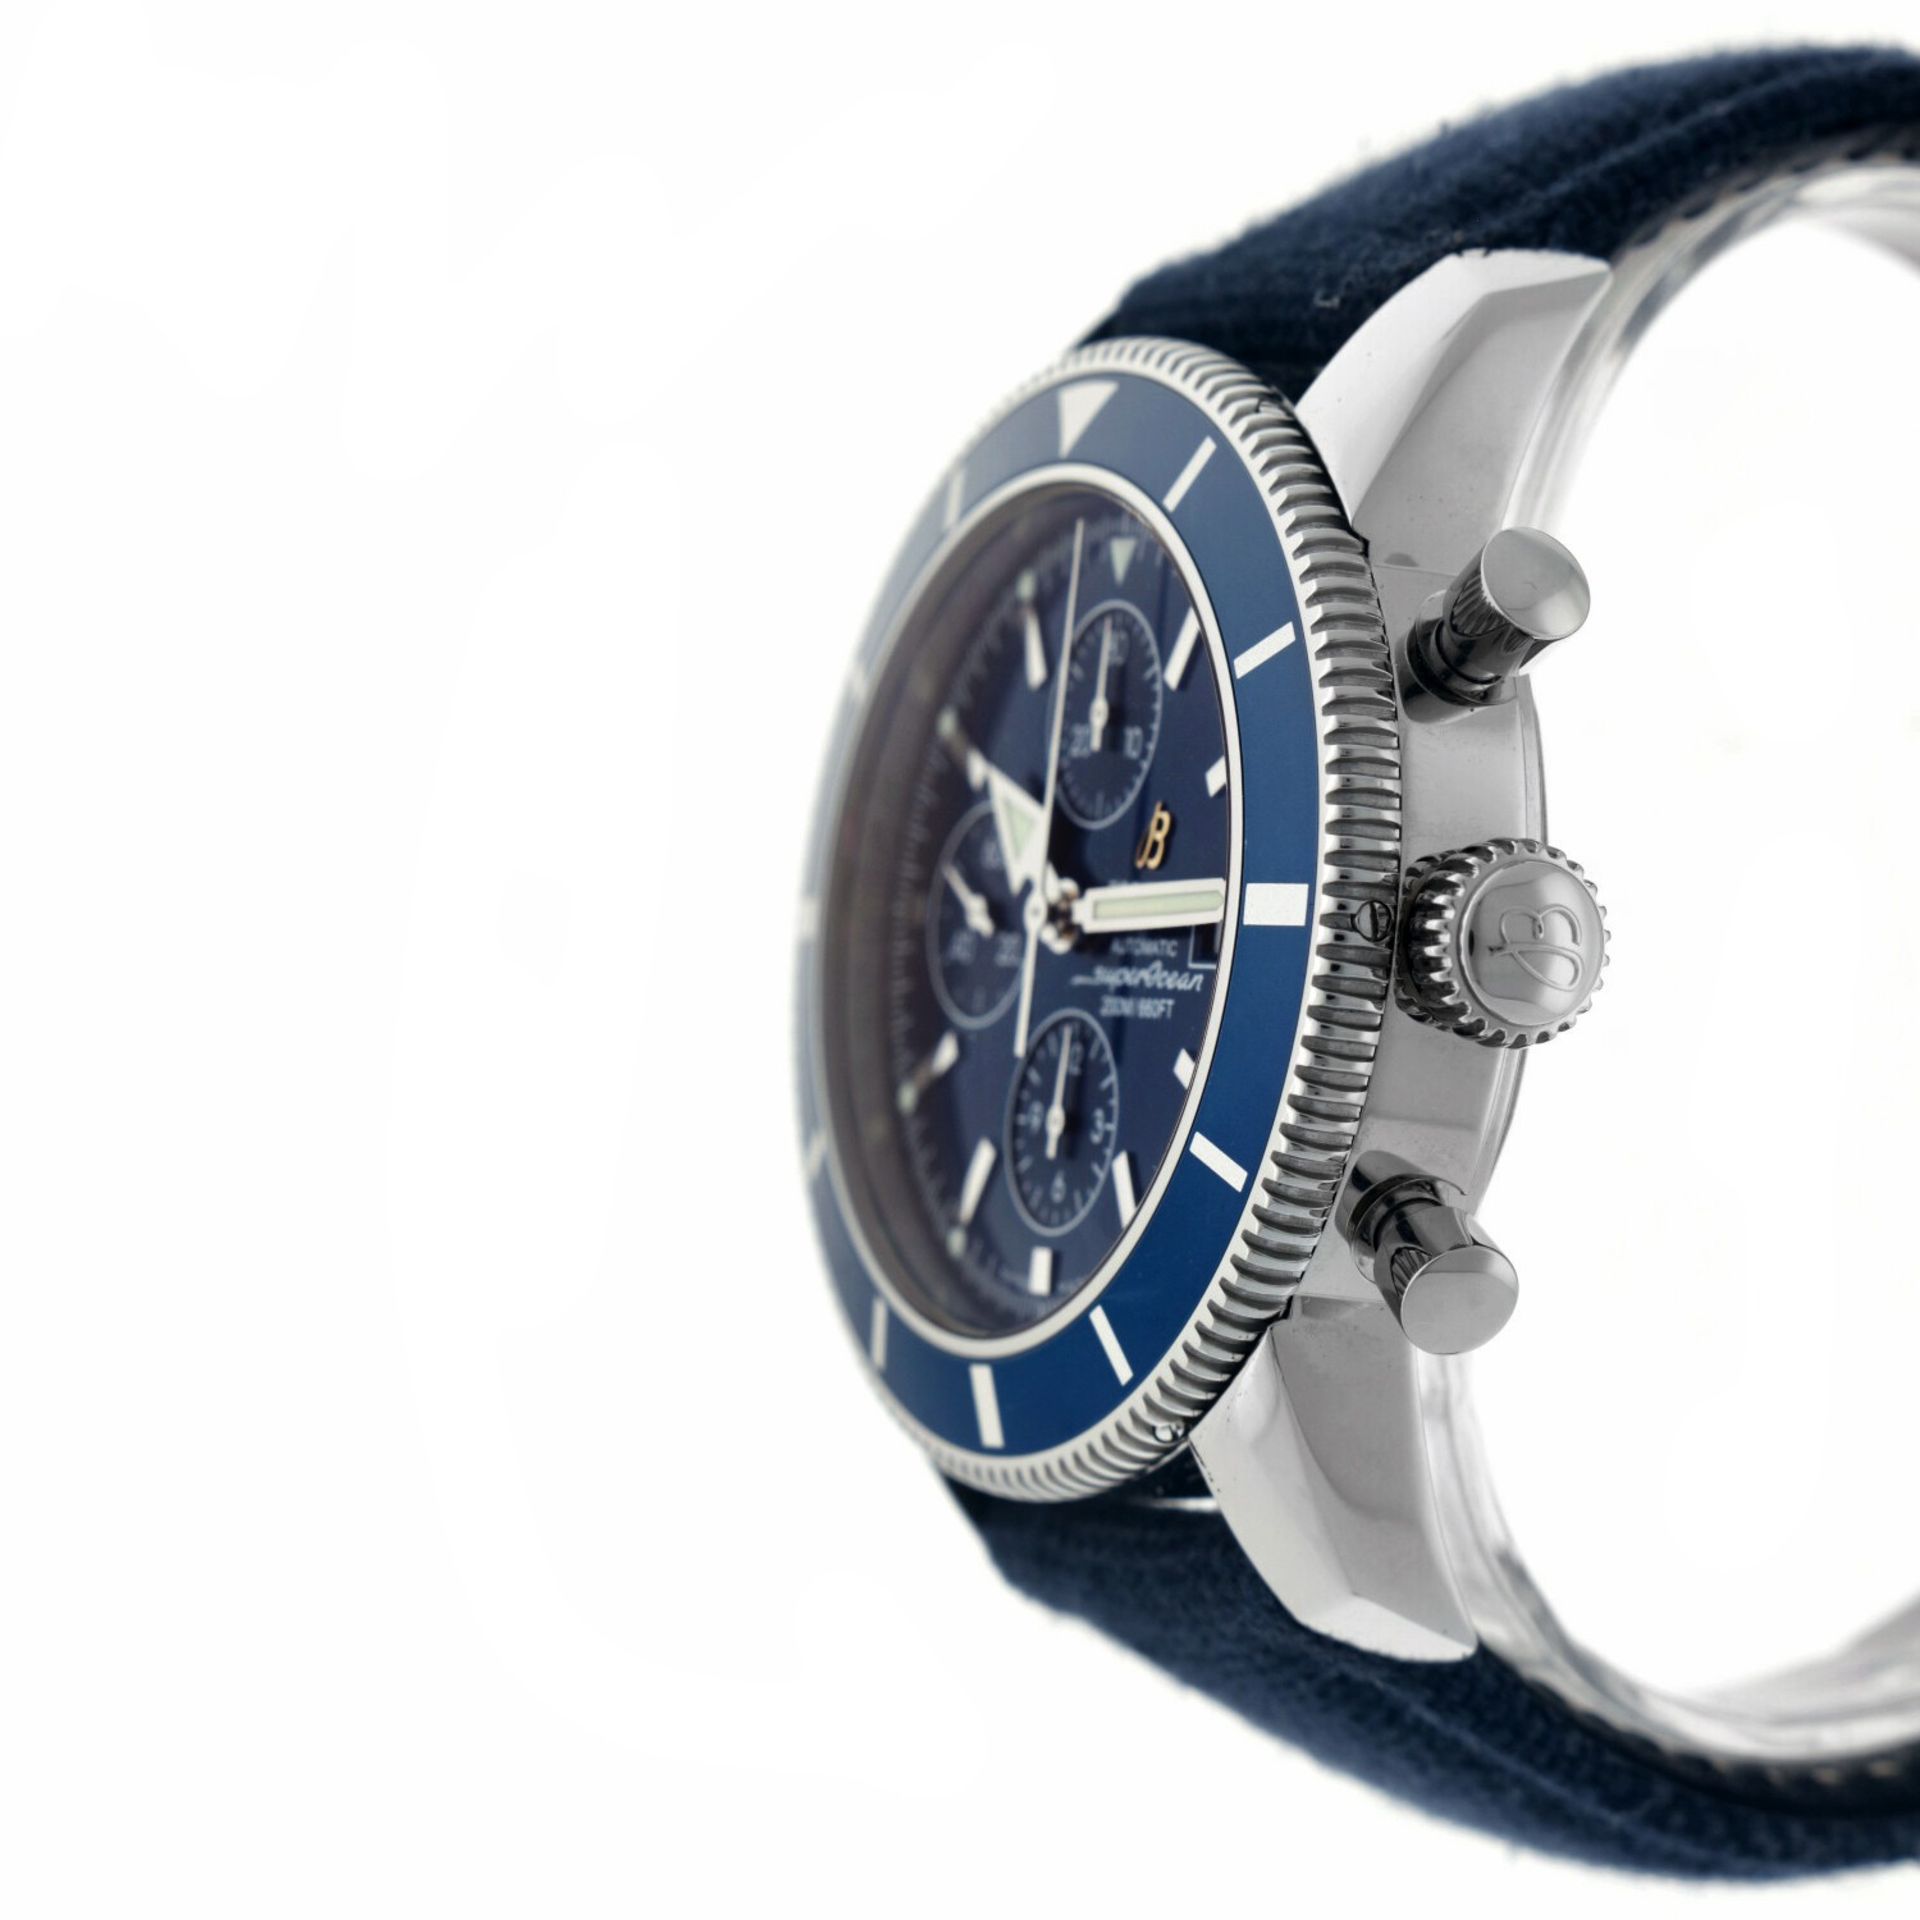 Breitling Superocean A13320 - Men's watch. - Image 5 of 6